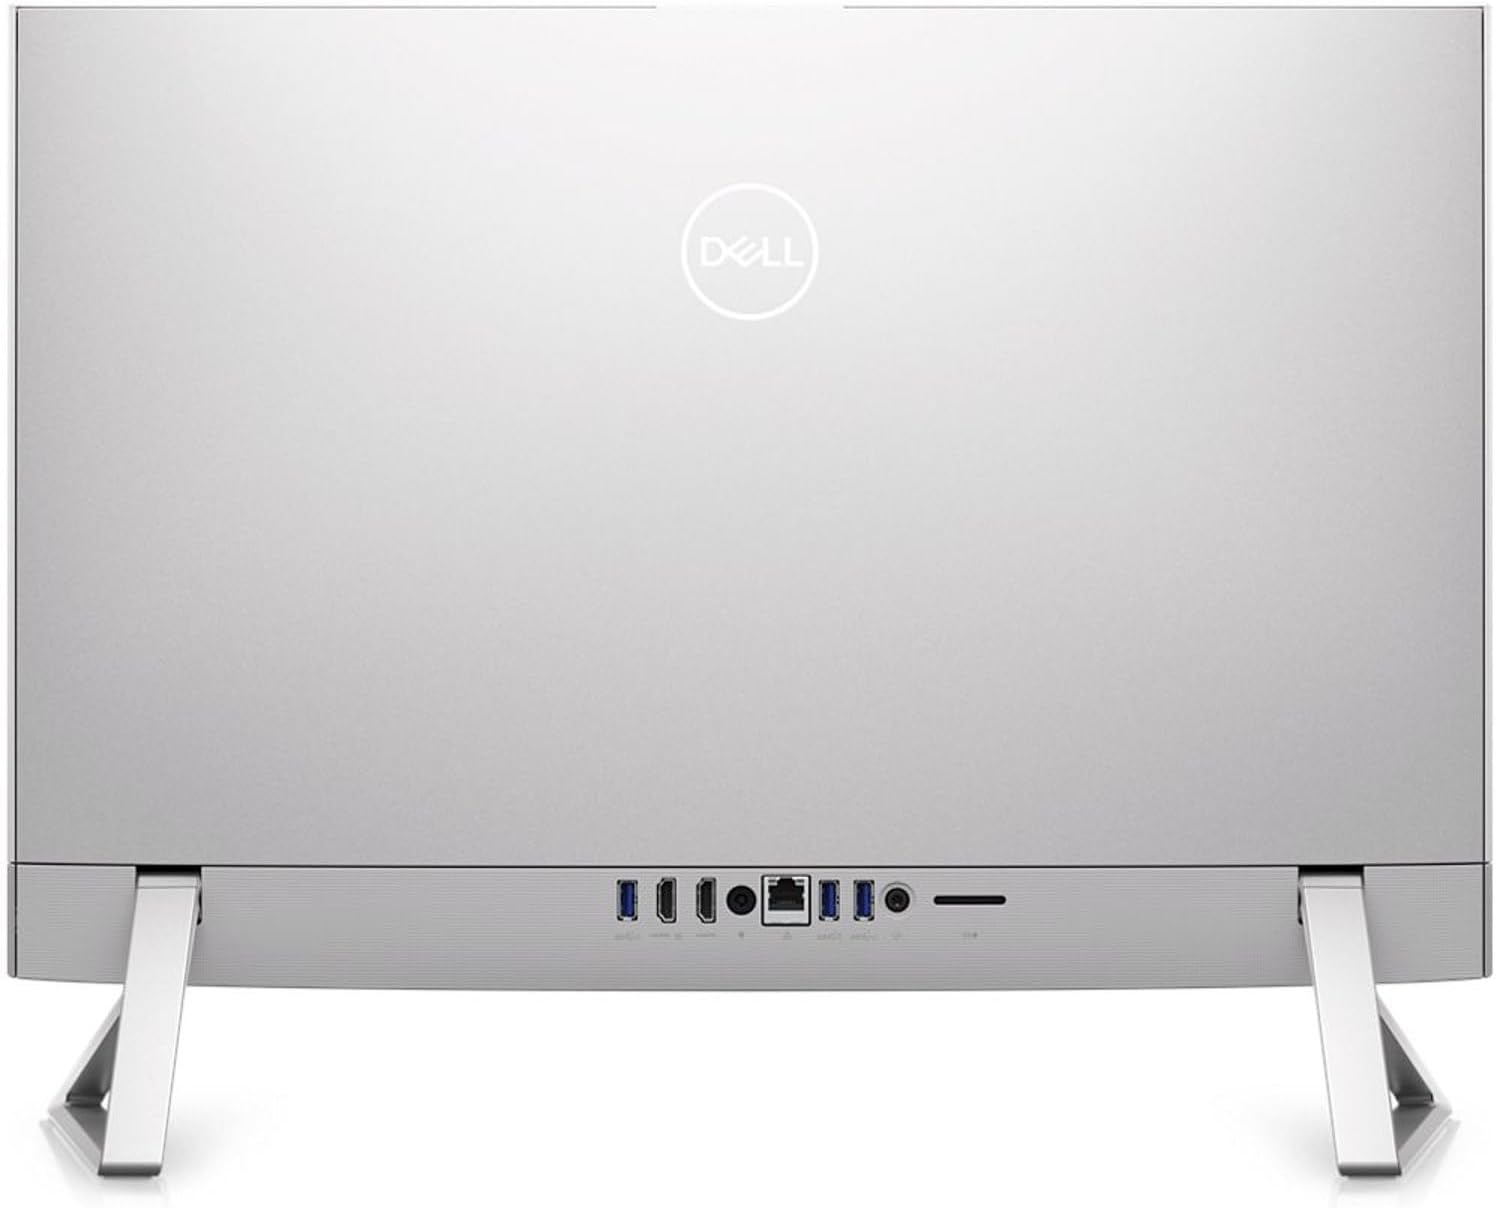 Intel i5-1235U Dell Inspiron 5410 All-in-One Desktop with 23.8 FHD Display, 8GB RAM 6291109534631